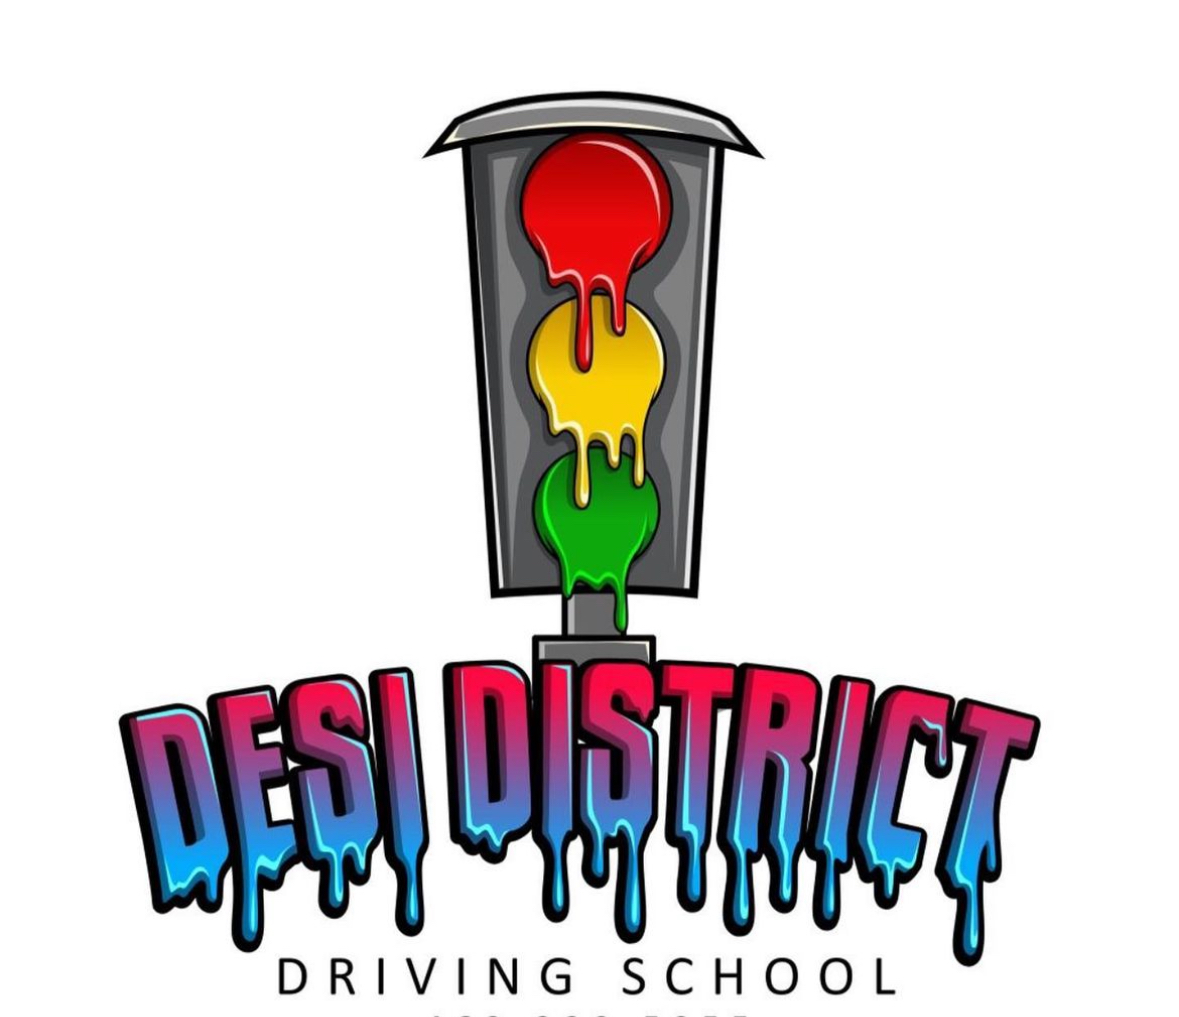 Desi-District-Driving-School-logo.jpg